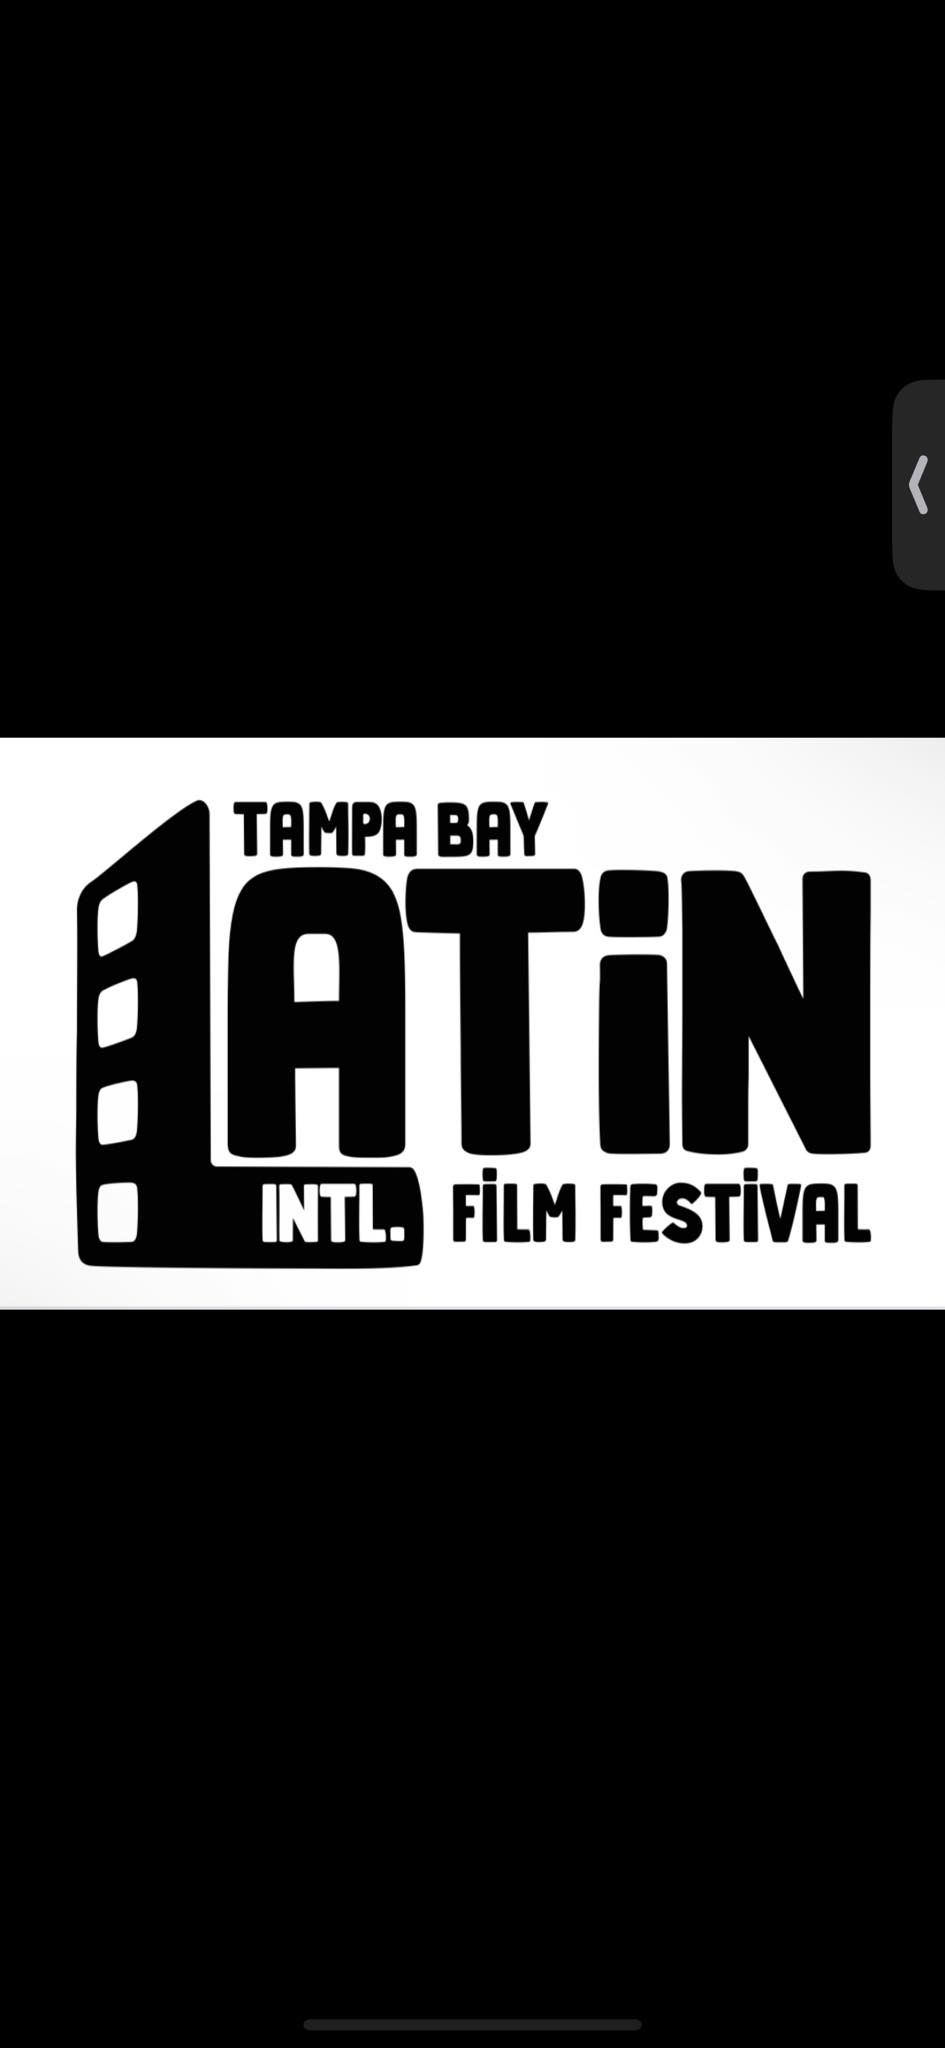 4th Annual Tampa Bay Latin International Film Festival 